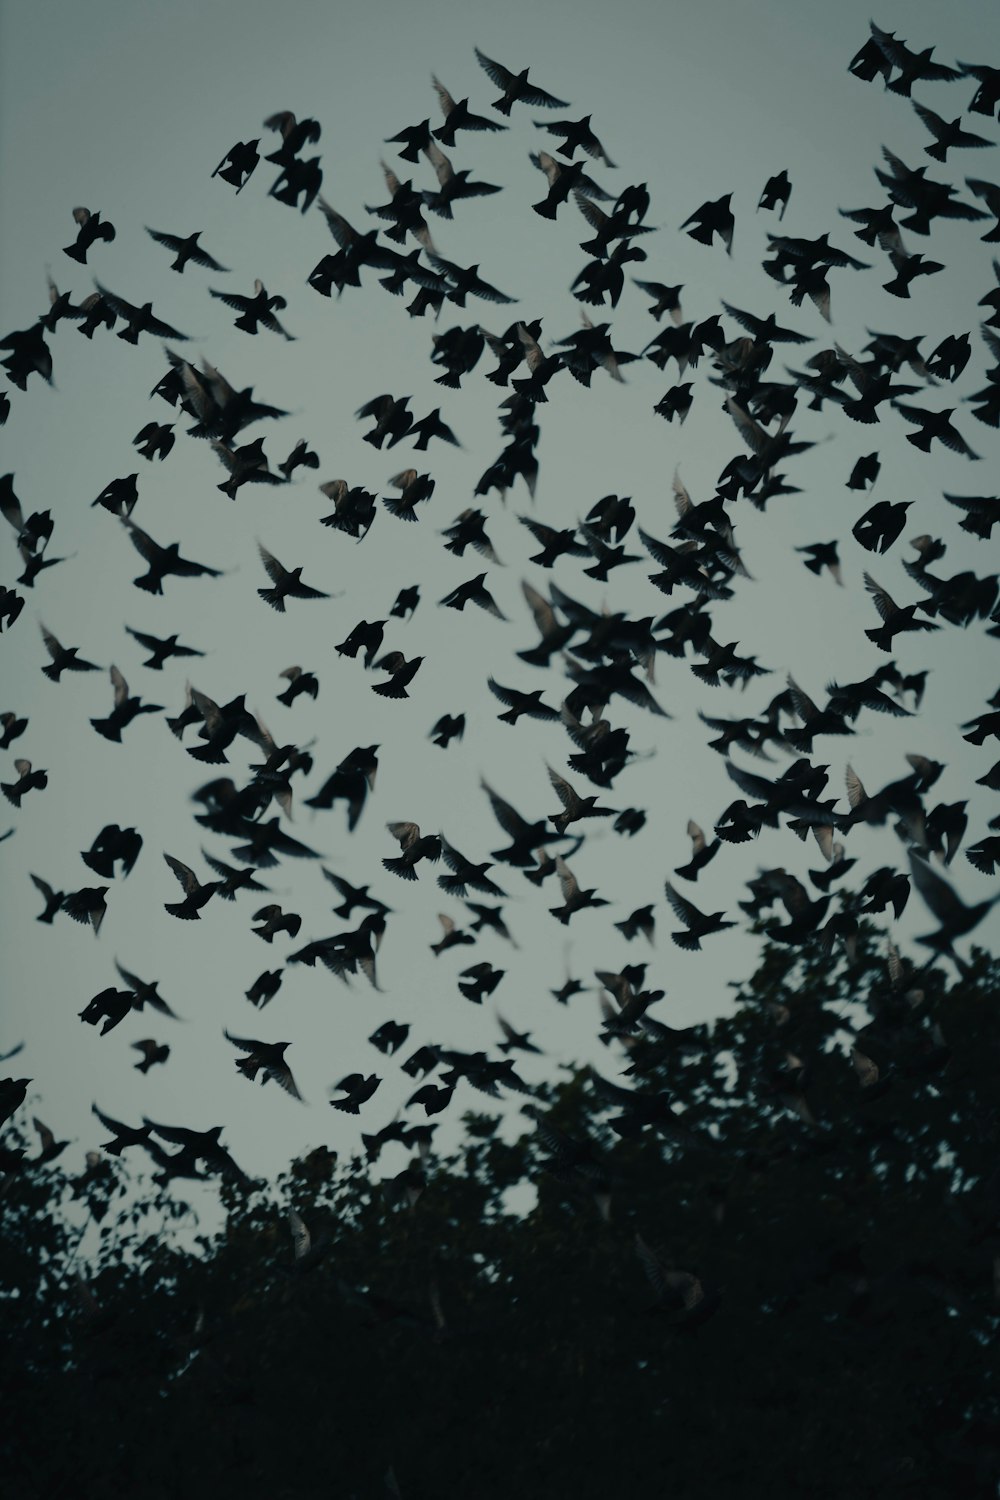 a flock of birds flying